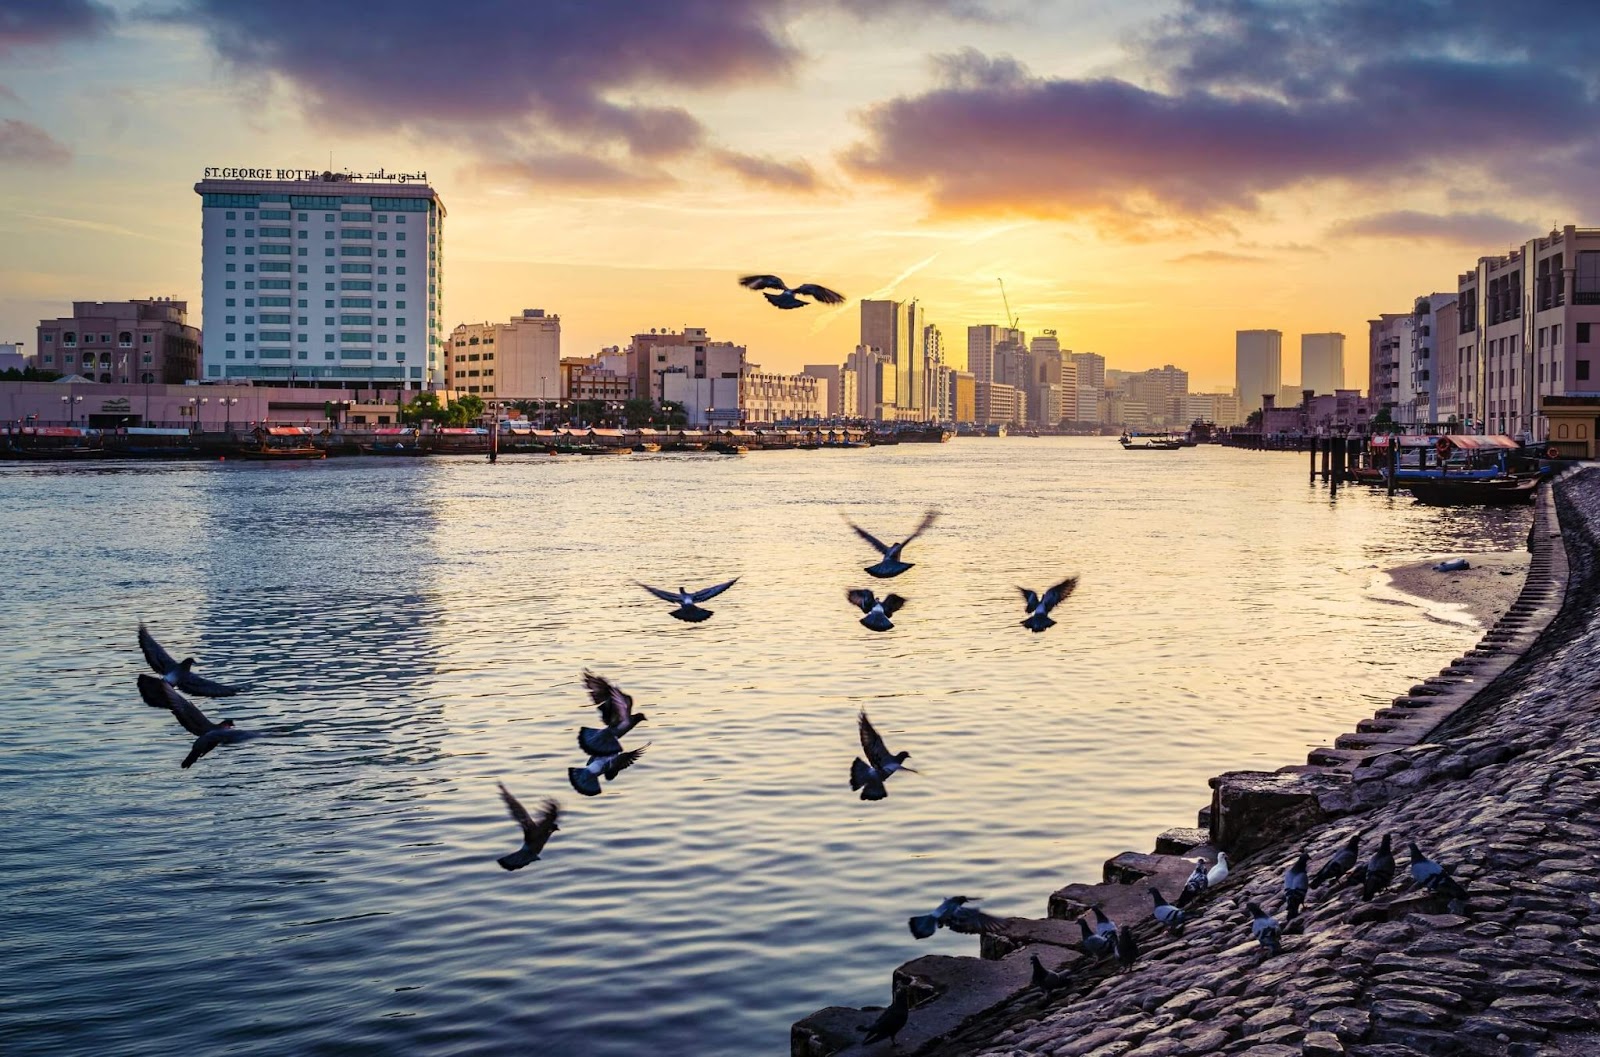 Dubai Creek Harbour, sunset, birds flying